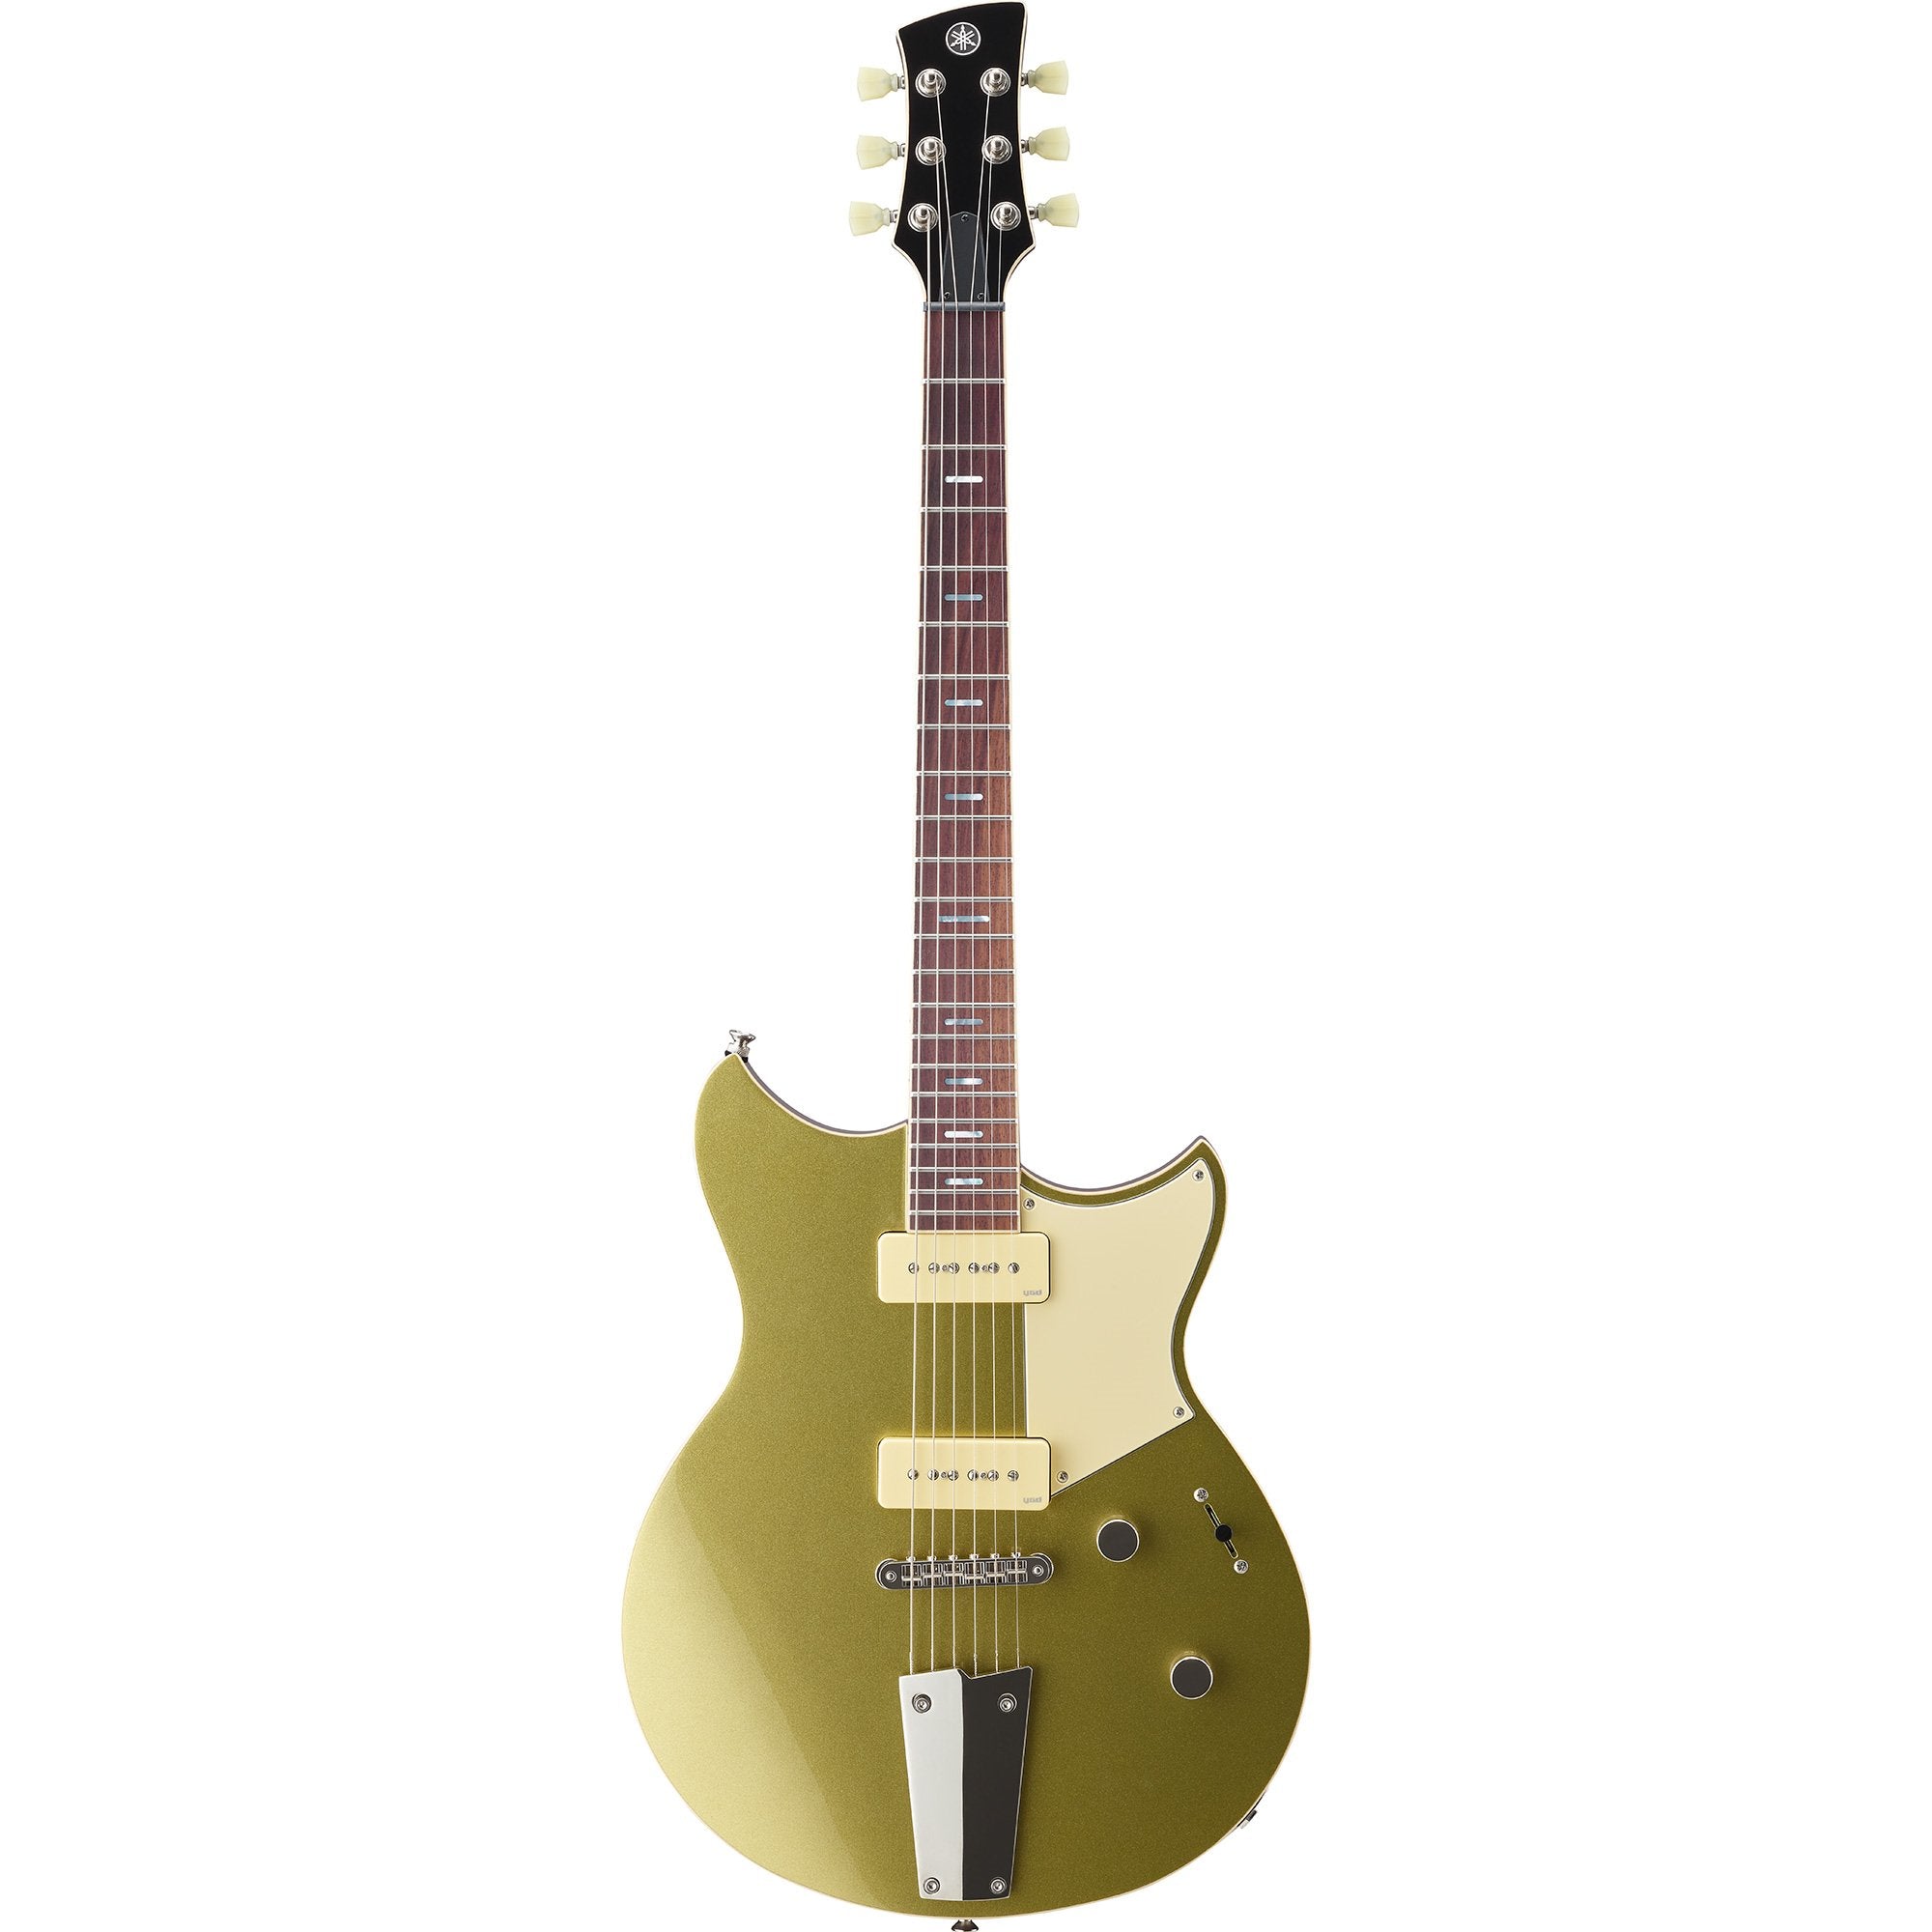 Yamaha Revstar Professional RSP02T Electric Guitar, Crisp Gold